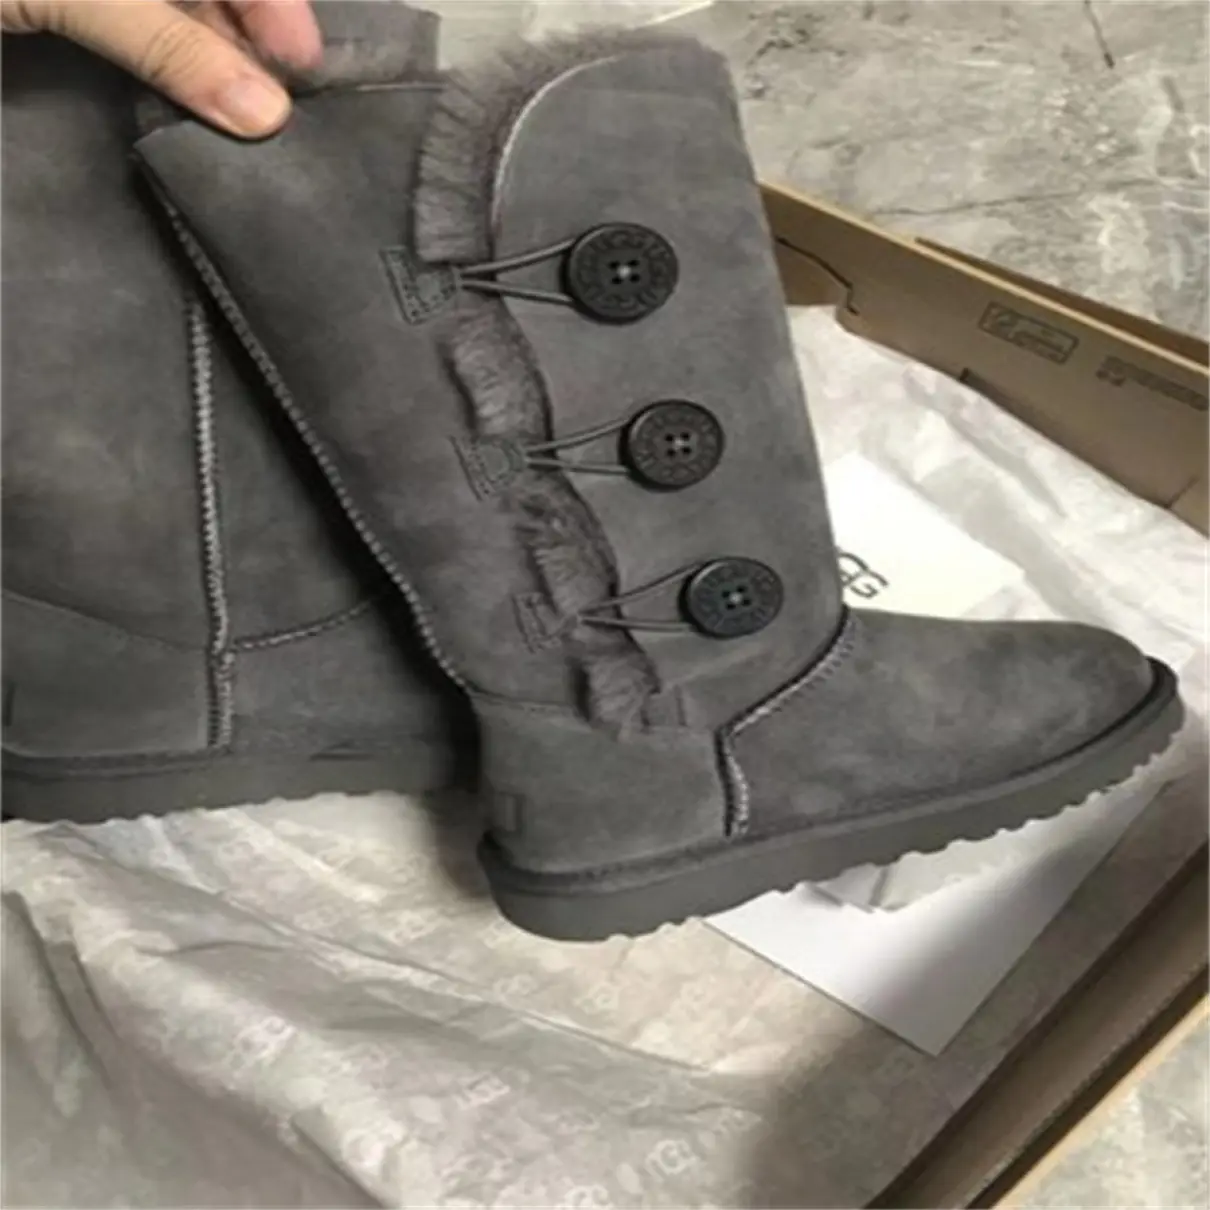 Cloth boots Ugg